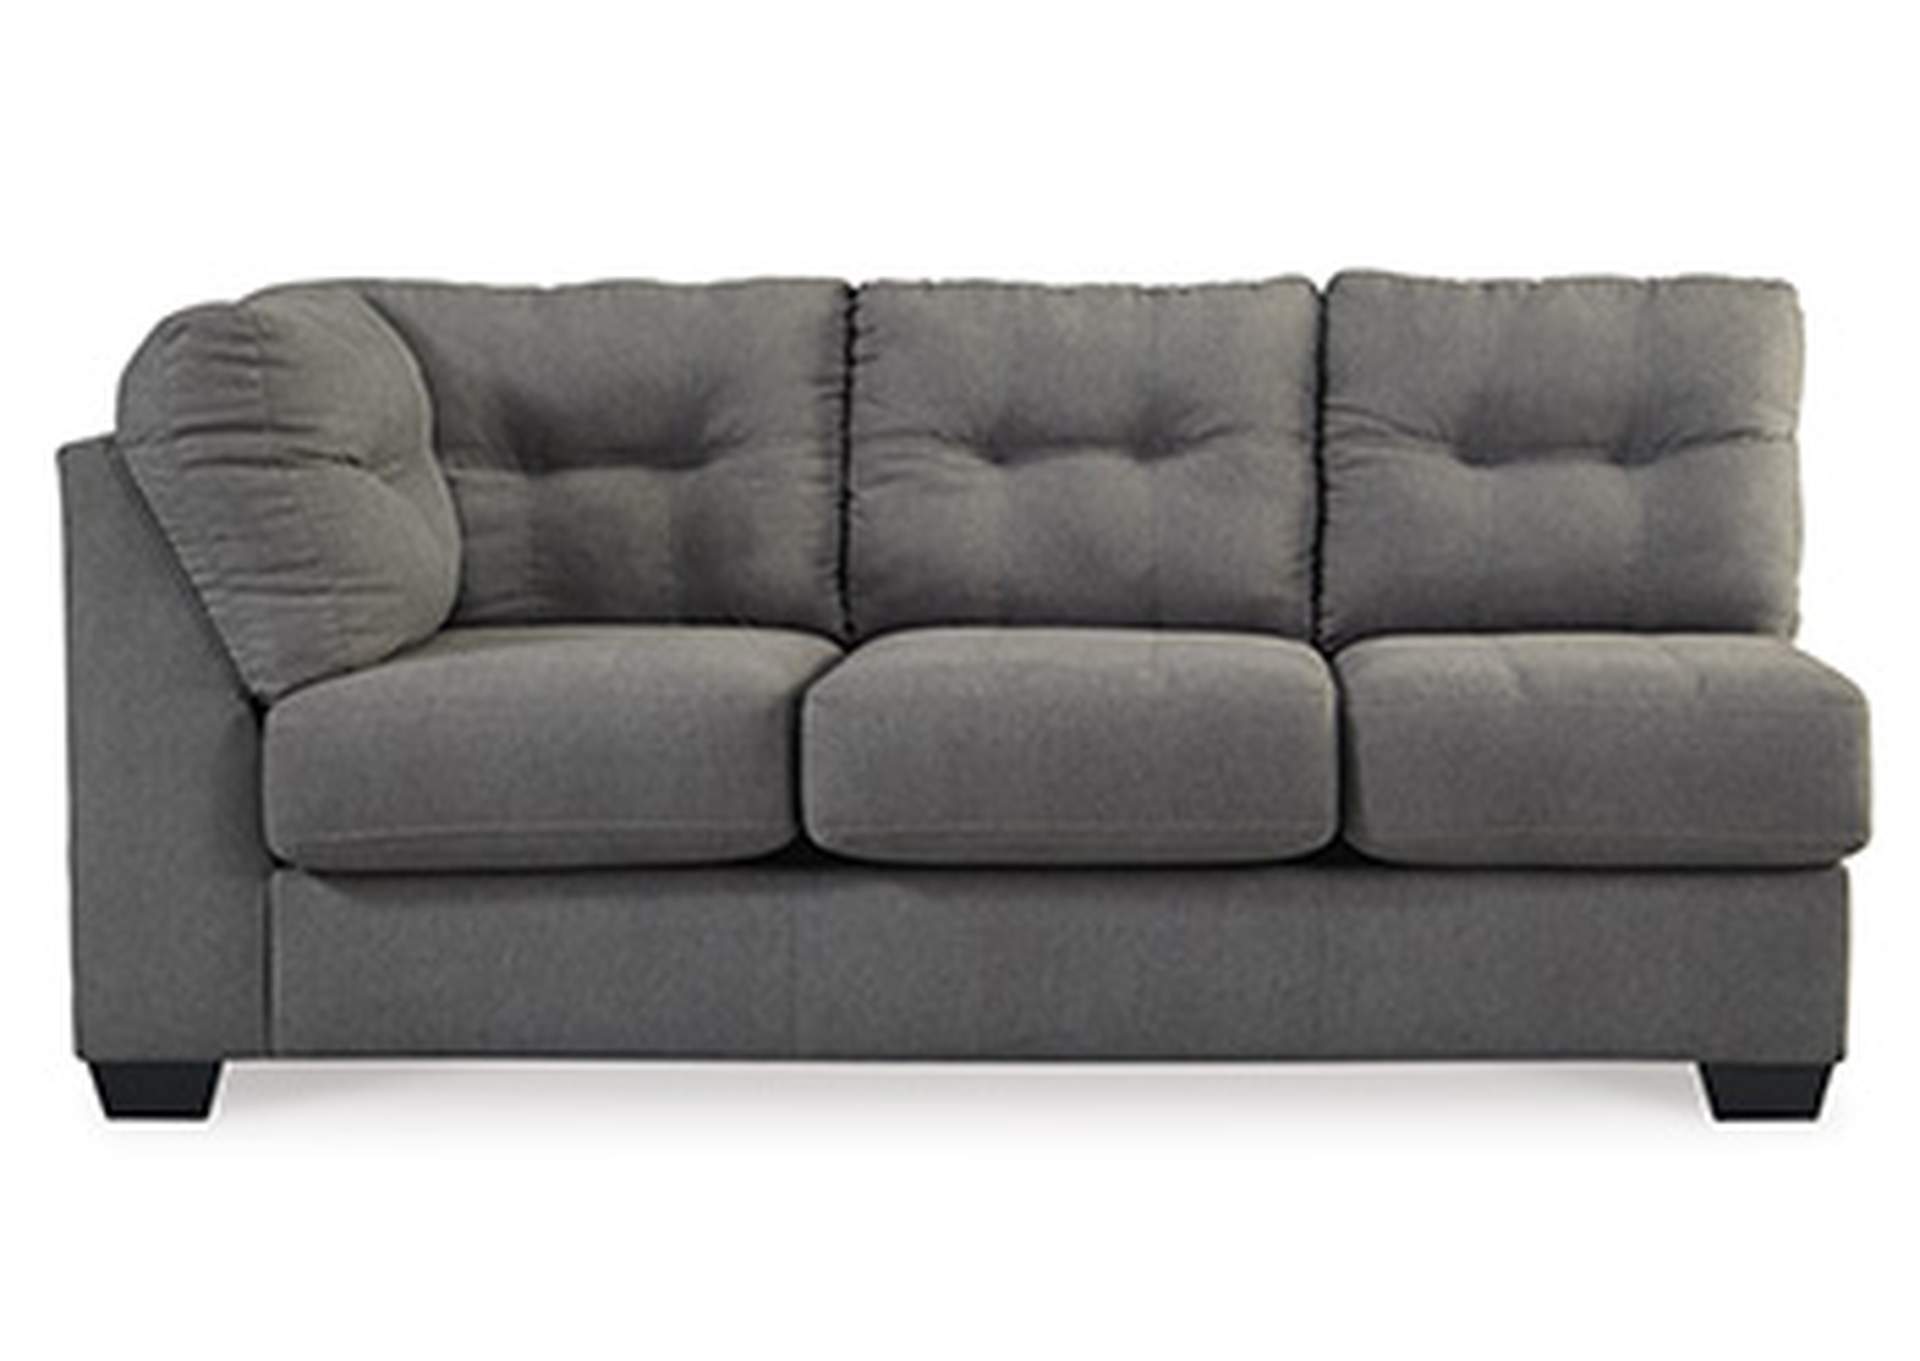 Maier Left-Arm Facing Sofa,Benchcraft